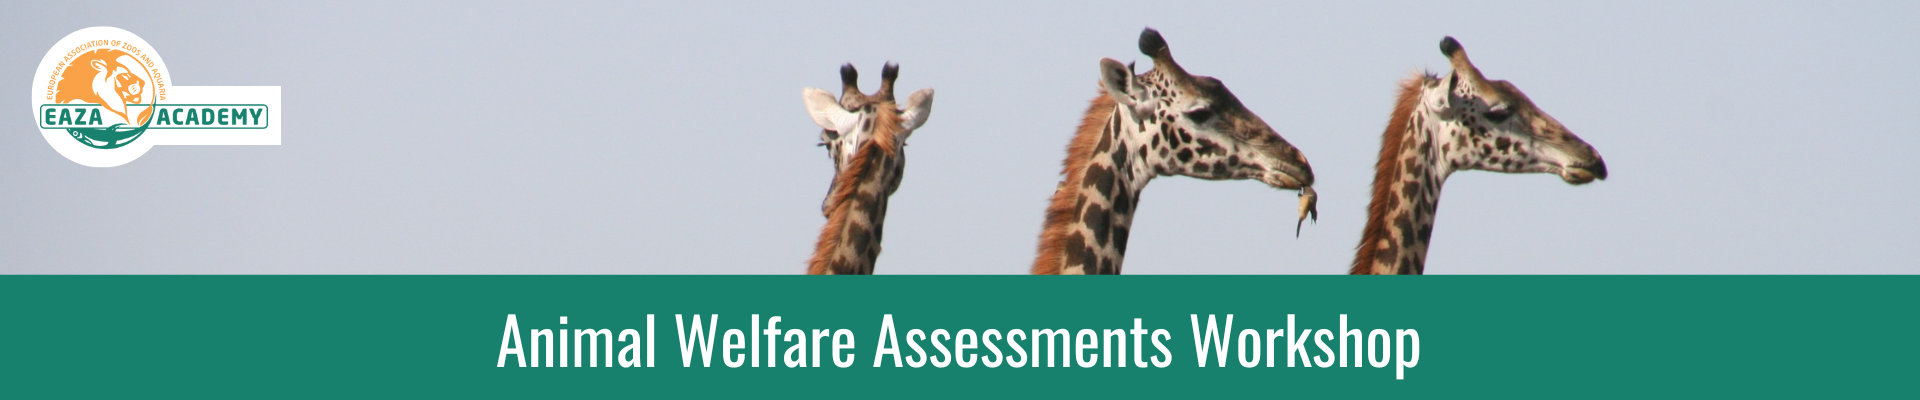 EAZA Academy Animal Welfare Assessments Workshop